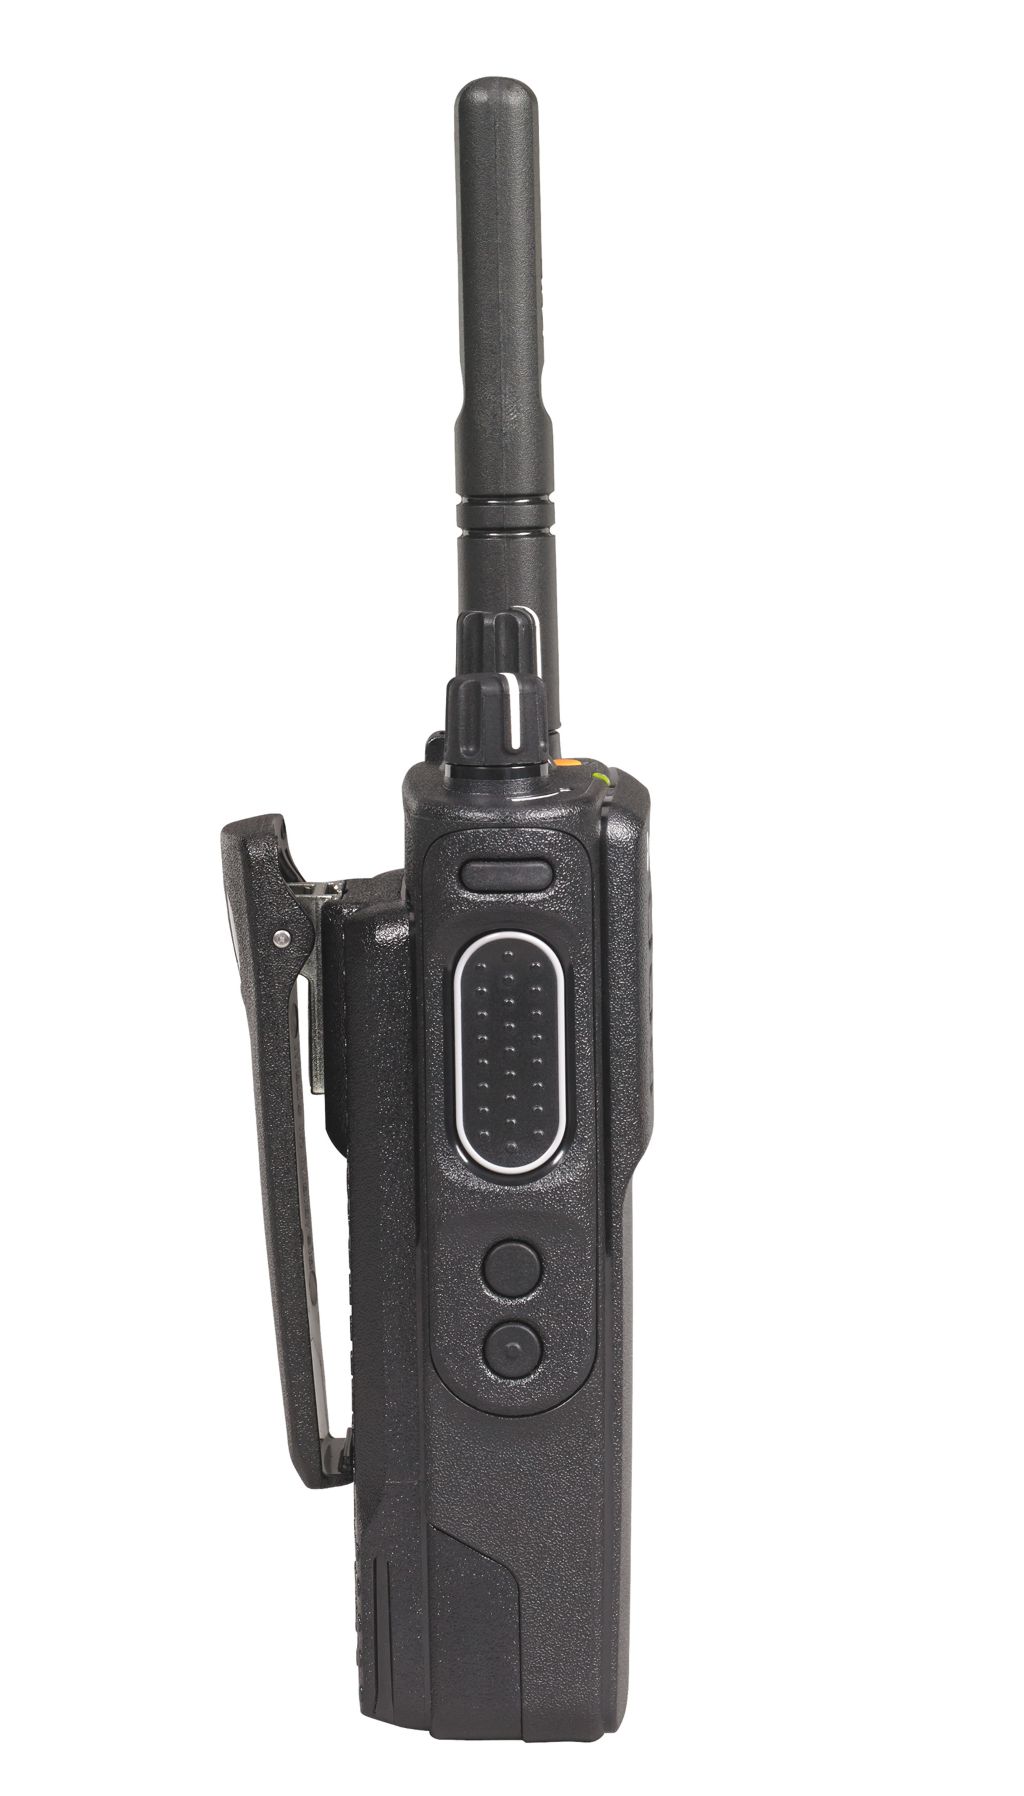 Motorola MOTOTRBO DP4401e WLAN Bluetooth GPS UHF 403-527 MHz ohne Zubehör MDH56RDC9RA1AN